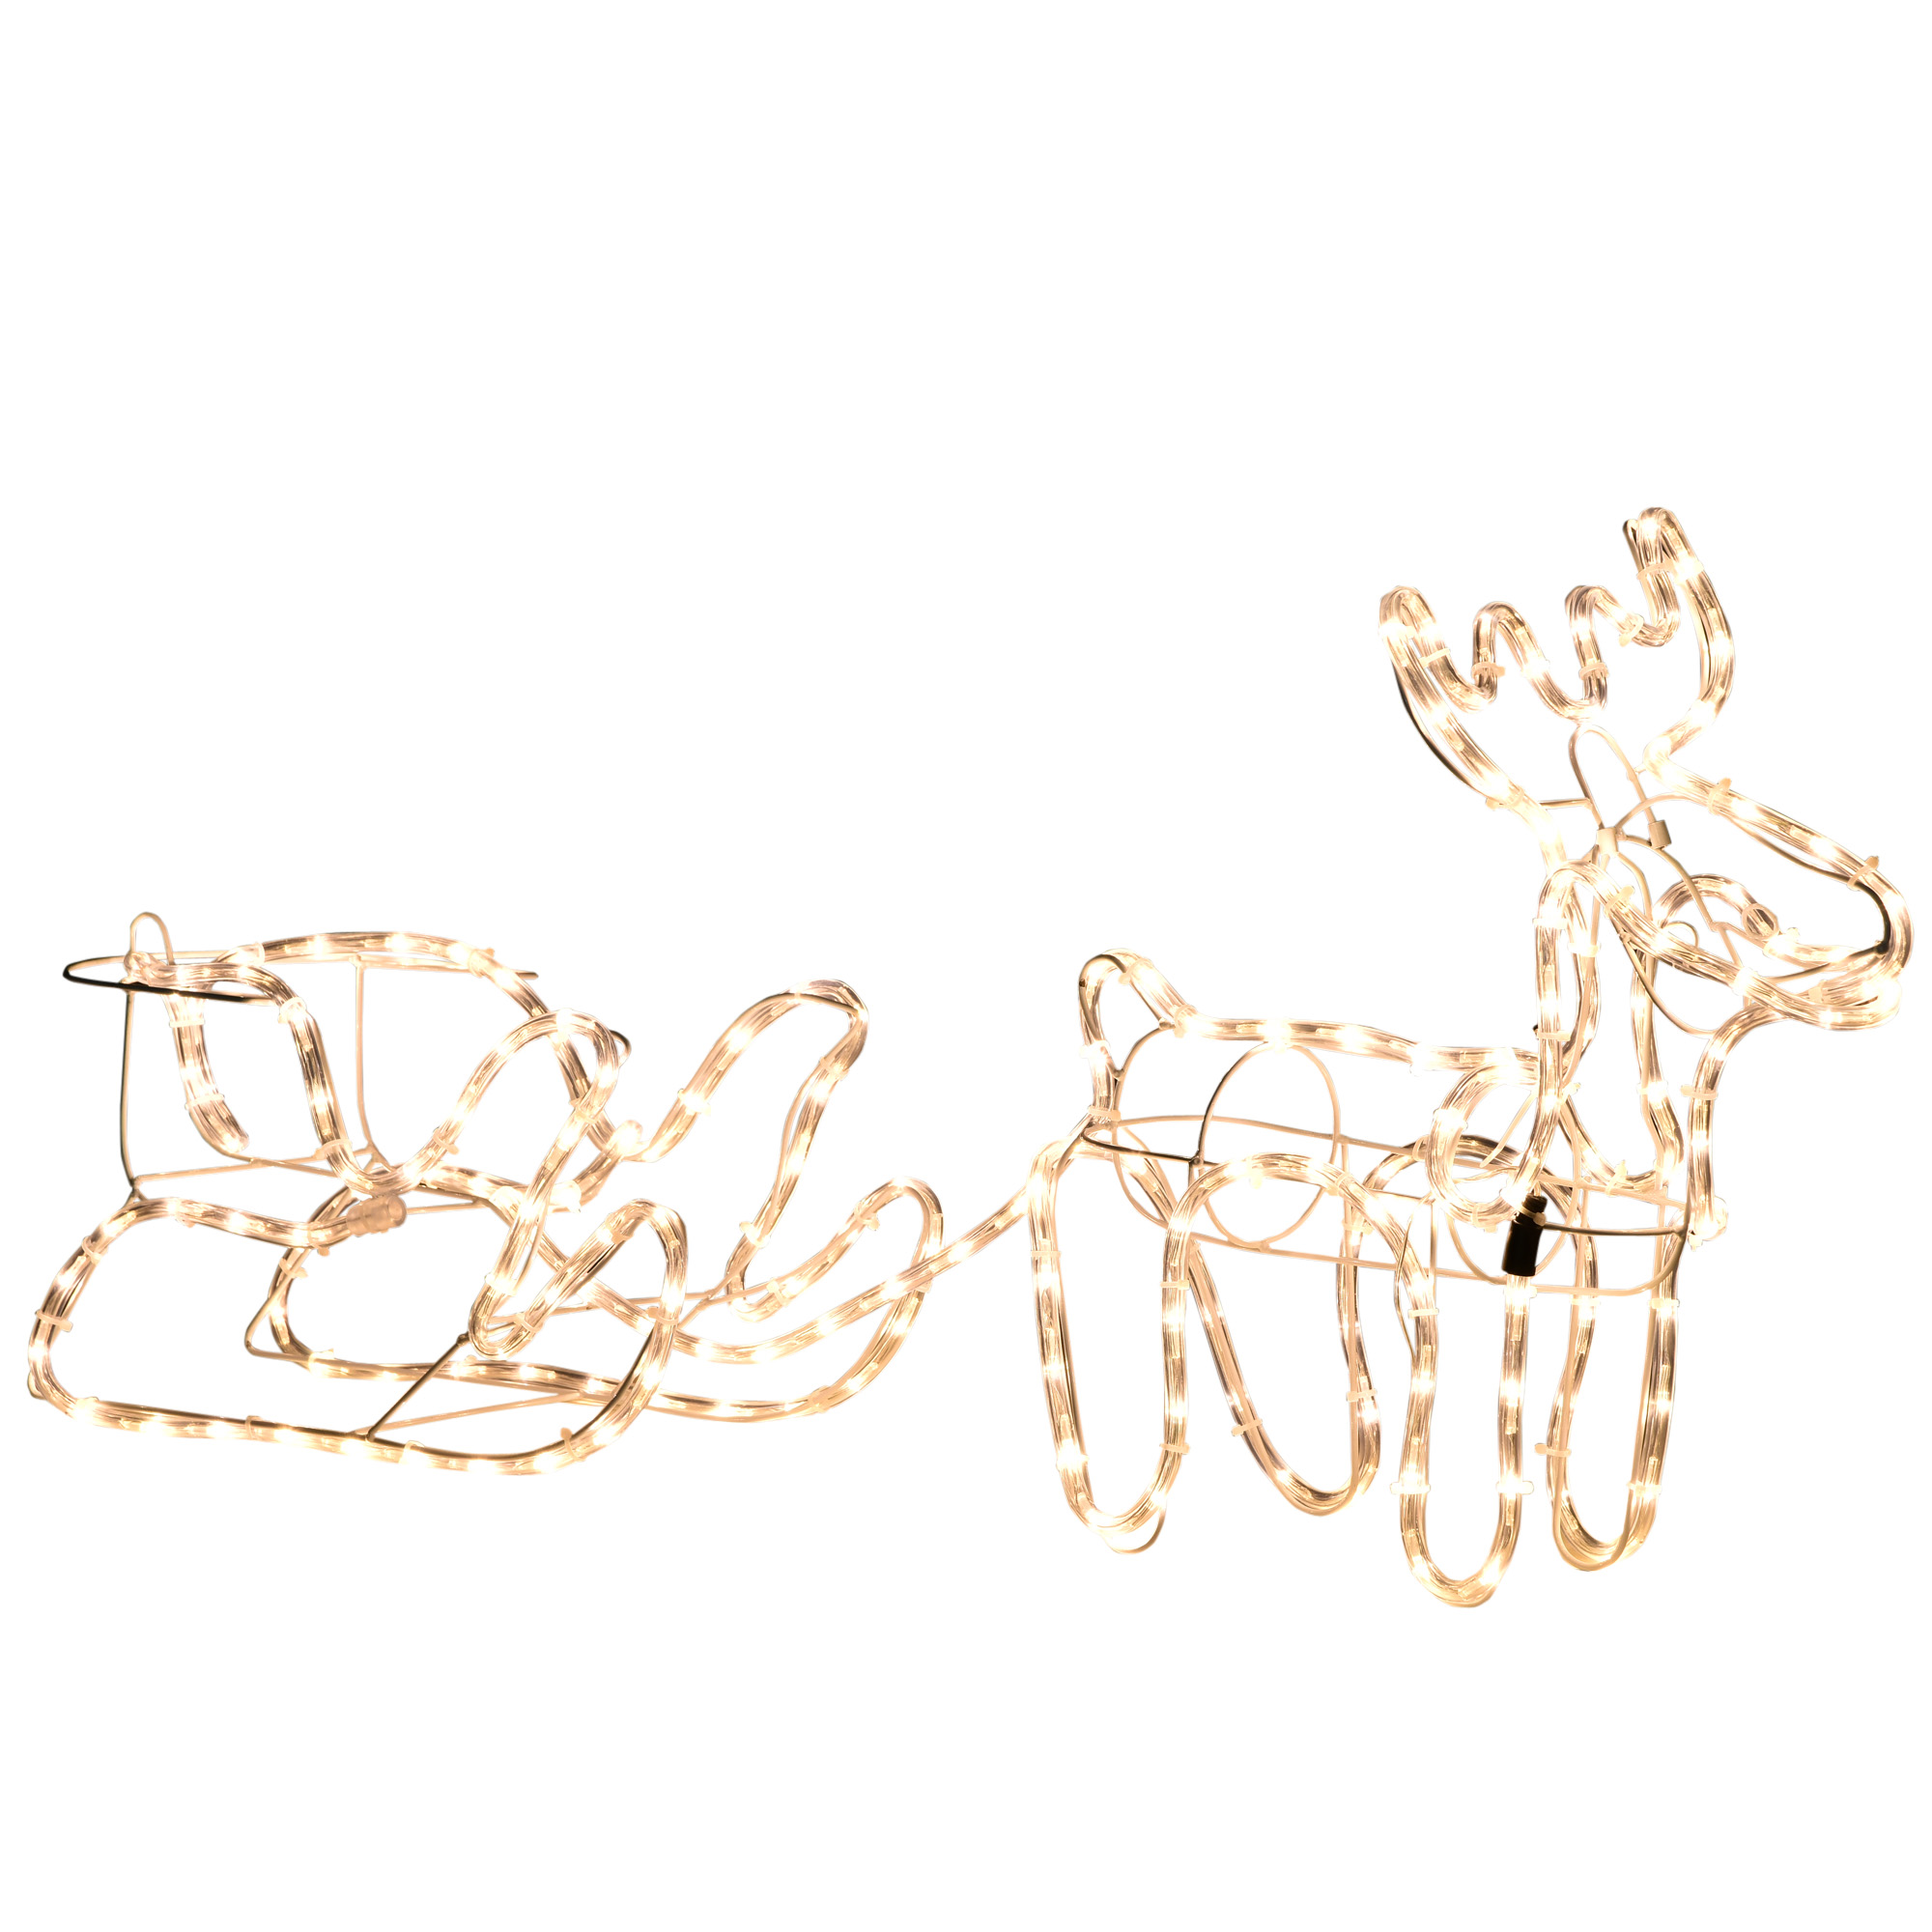 Silhouette renne lumineux avec traîneau 192 LED blanc chaud